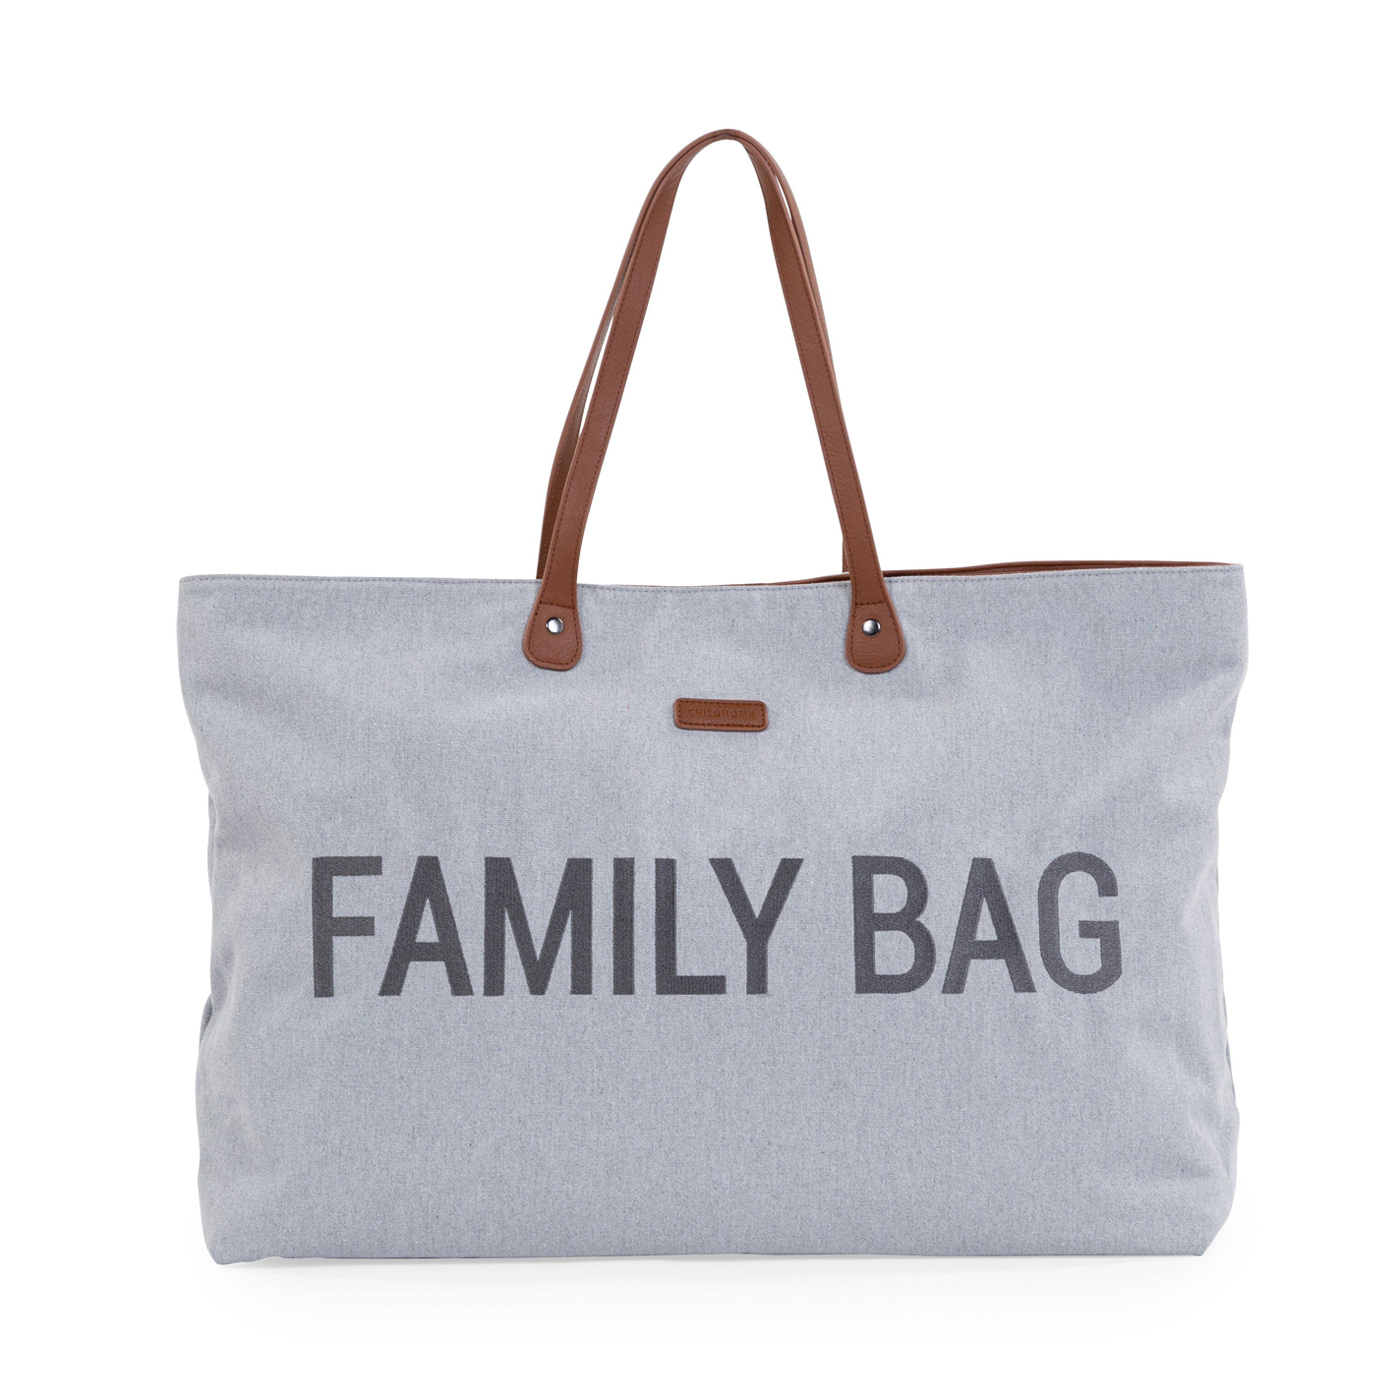  Childhome Family Bag Çanta | Gri